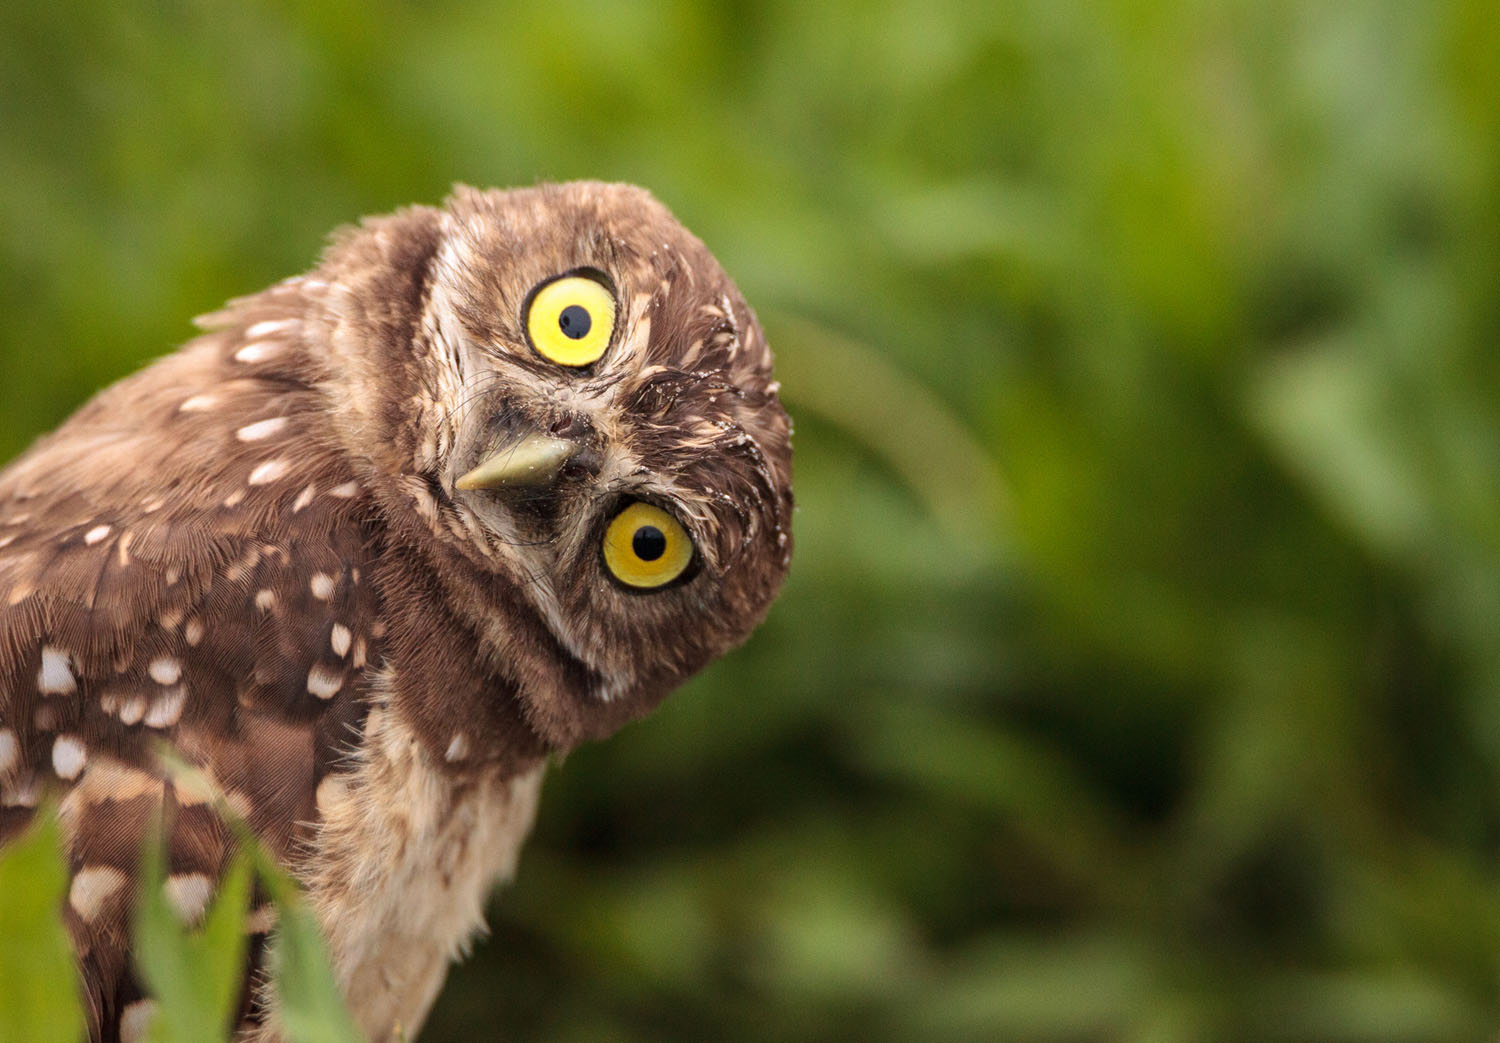 Photos: Superb Owl Sunday IV - The Atlantic